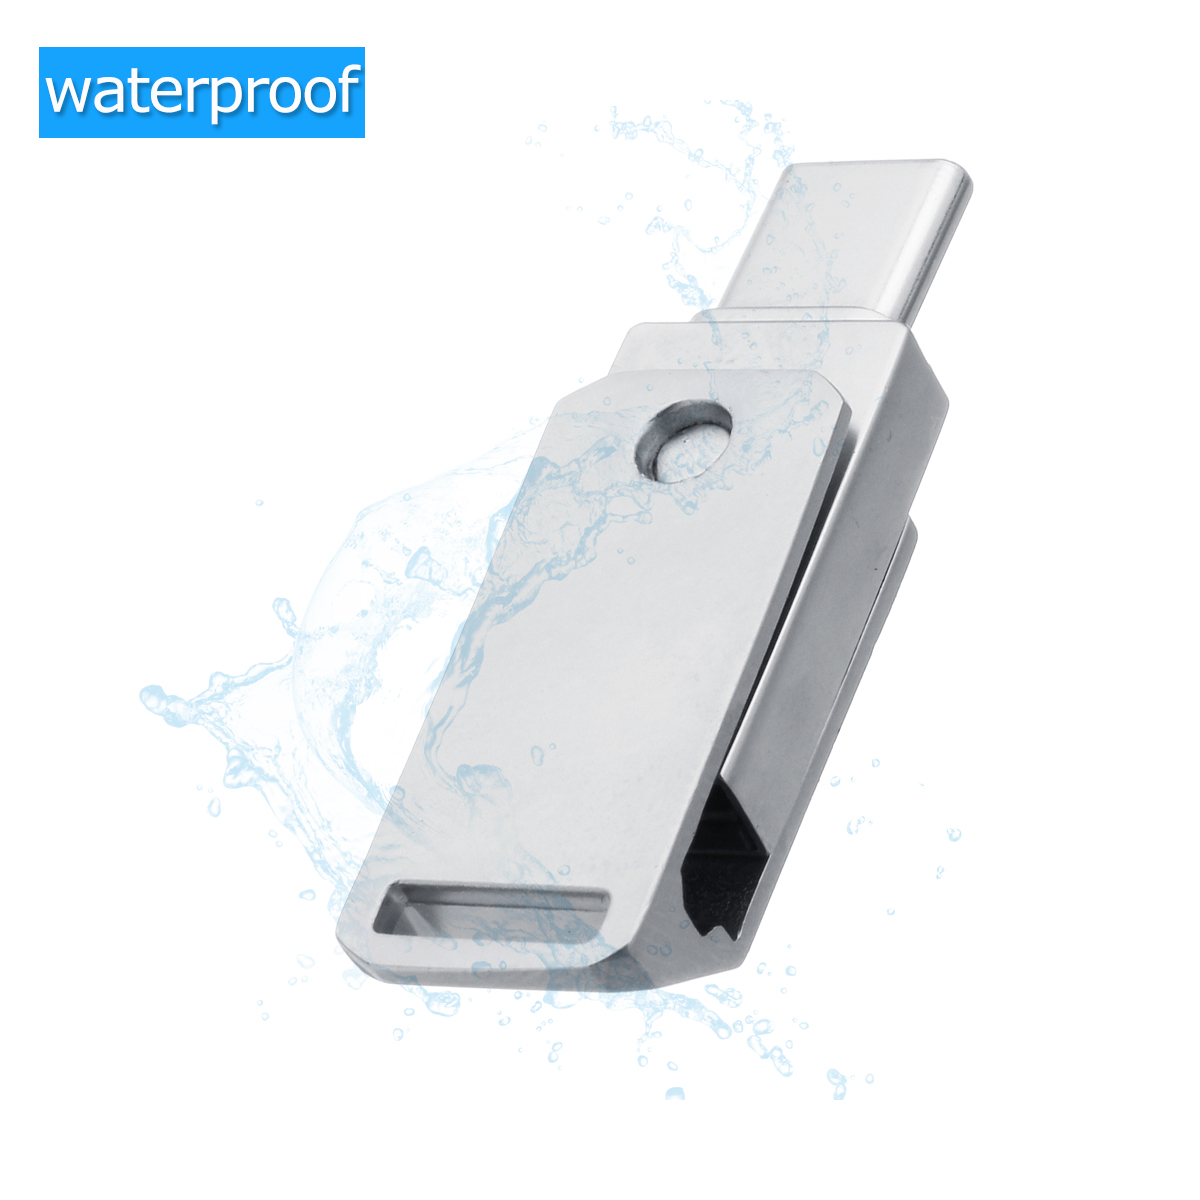 2-In-1-Waterproof-Type-C-OTG-USB-20-8GB-16GB-32GB-Flash-Drive-U-Disk-For-Type-C-Smart-Phone-Laptop-D-1492915